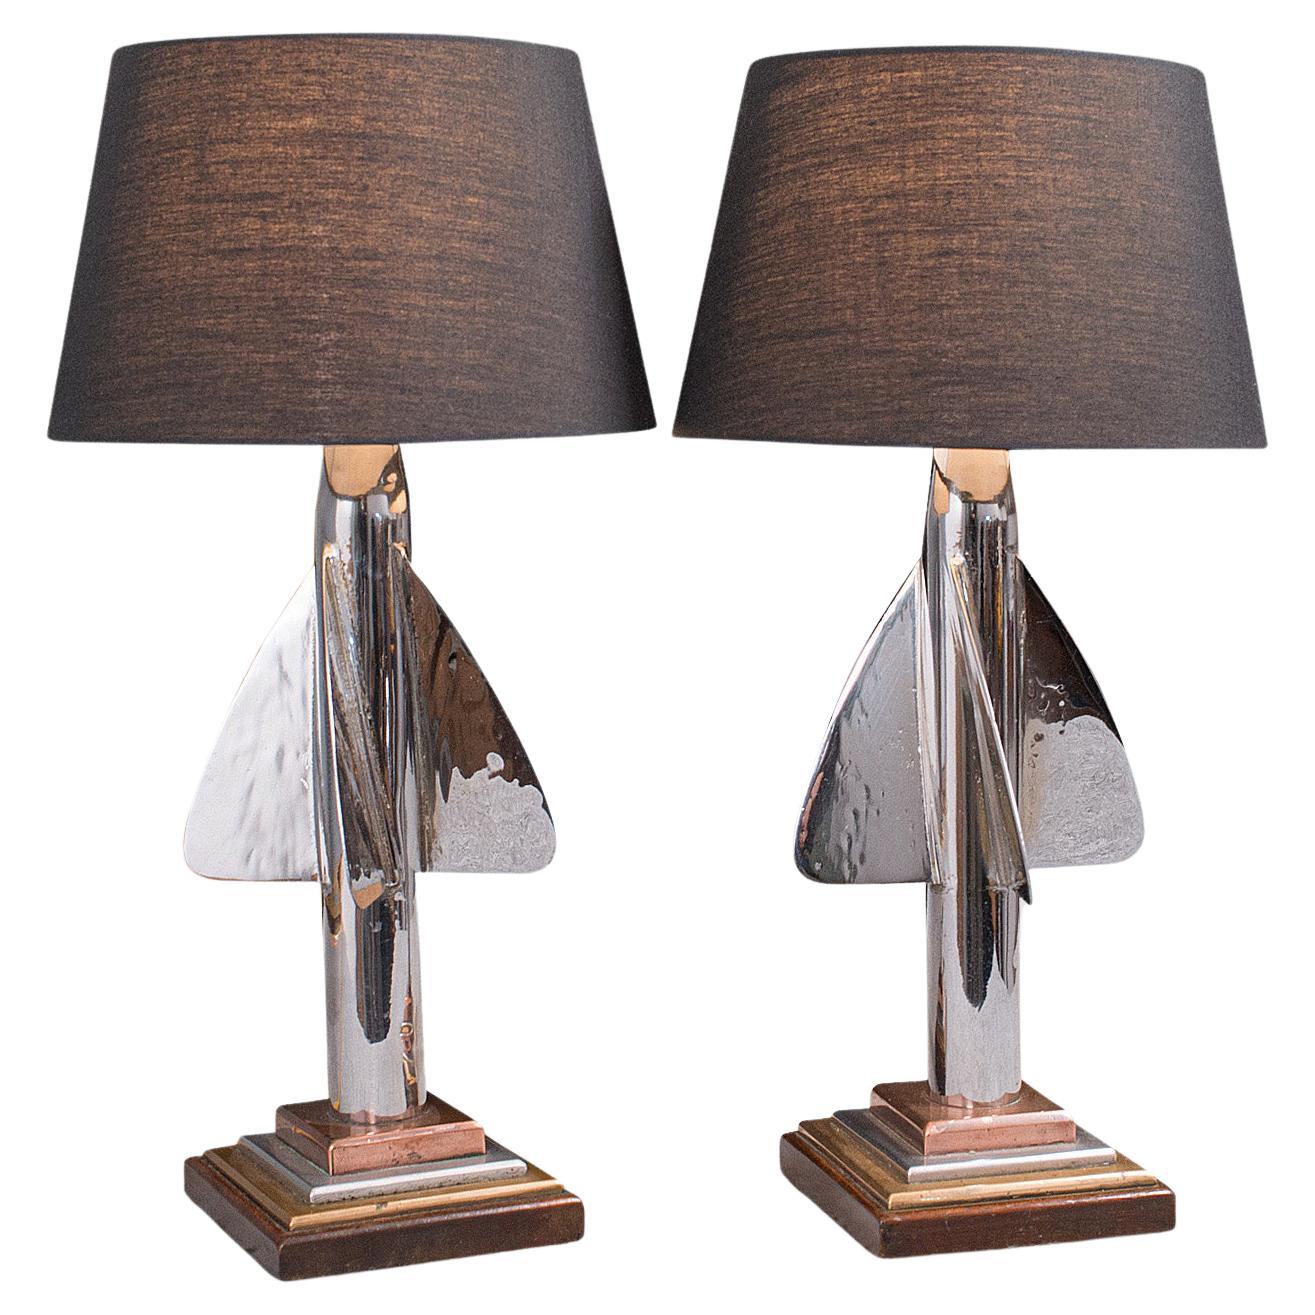 Pair of Vintage Maritime Desk Lamps, English, Ship's Log, Table Light, C.1930 For Sale